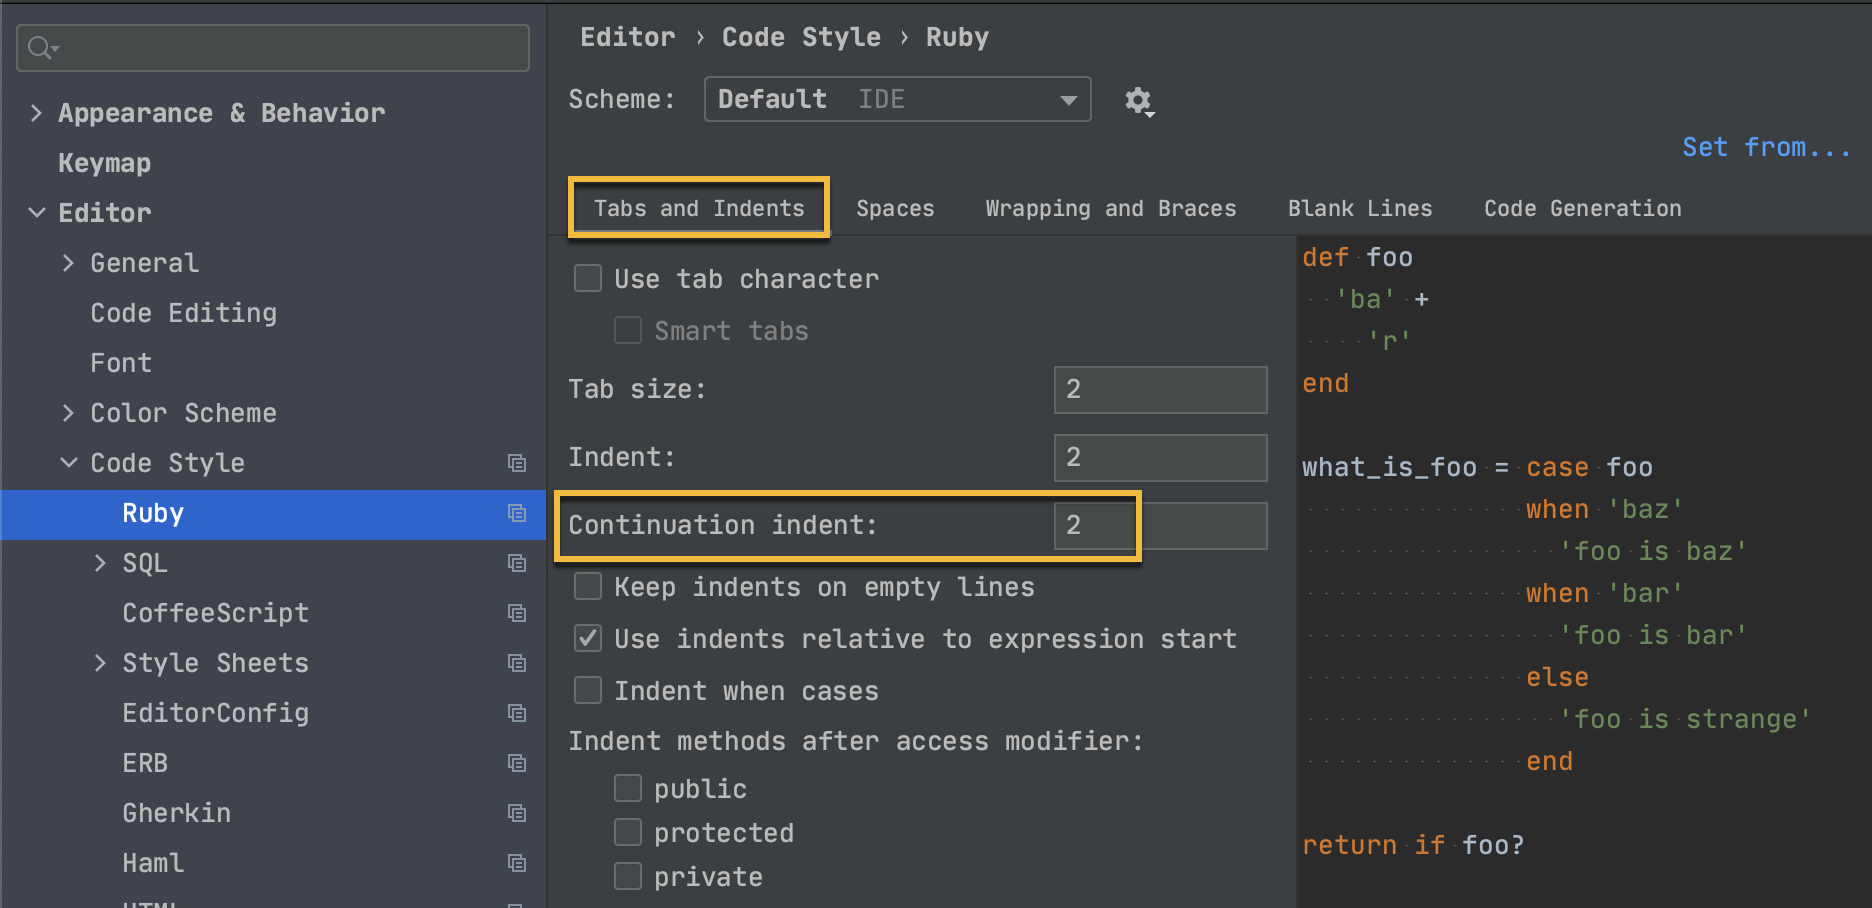 Code Style settings